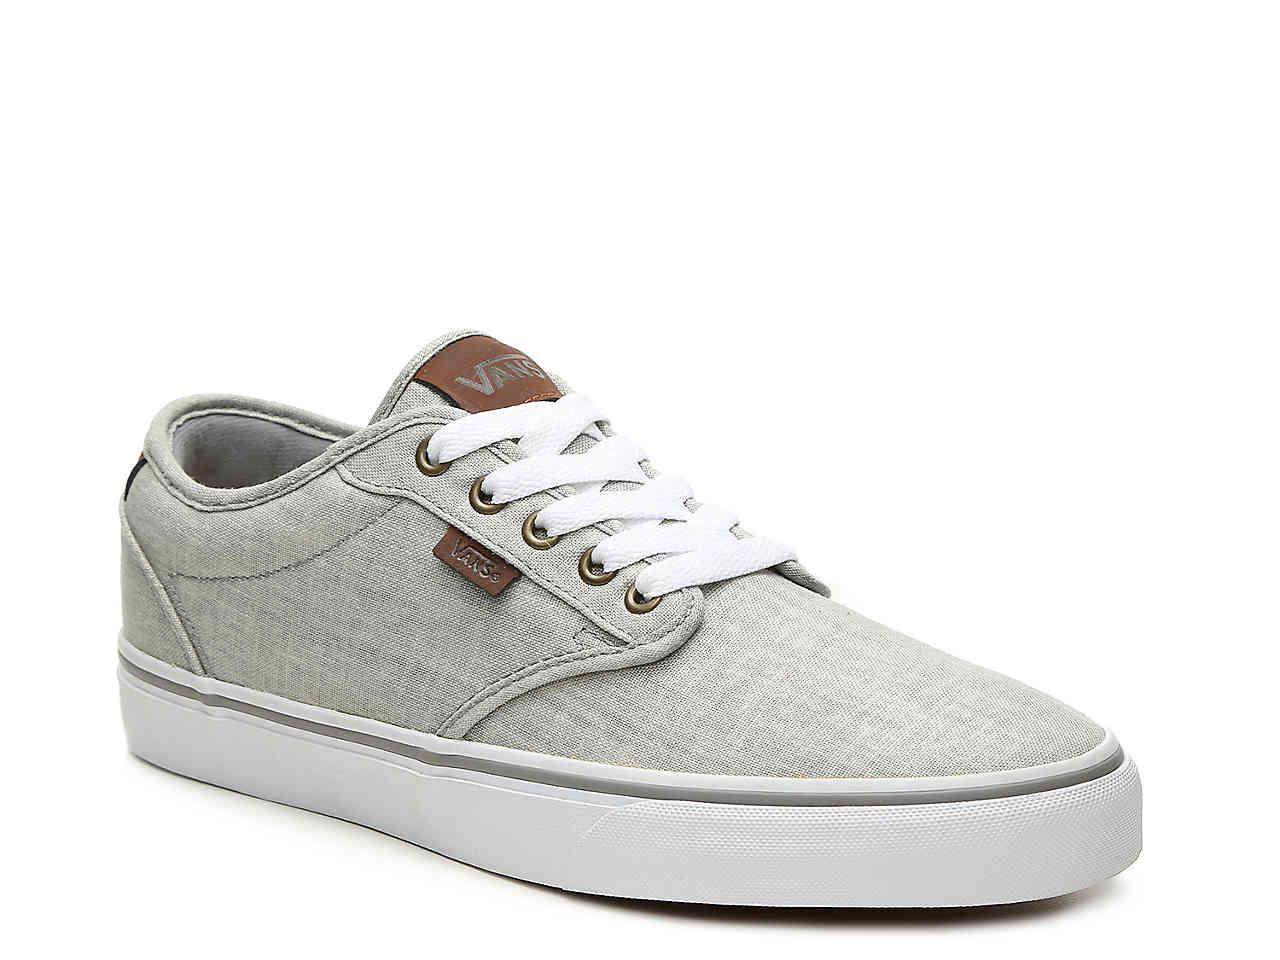 Vans Canvas Atwood Sneaker in Grey (Gray) for Men - Lyst